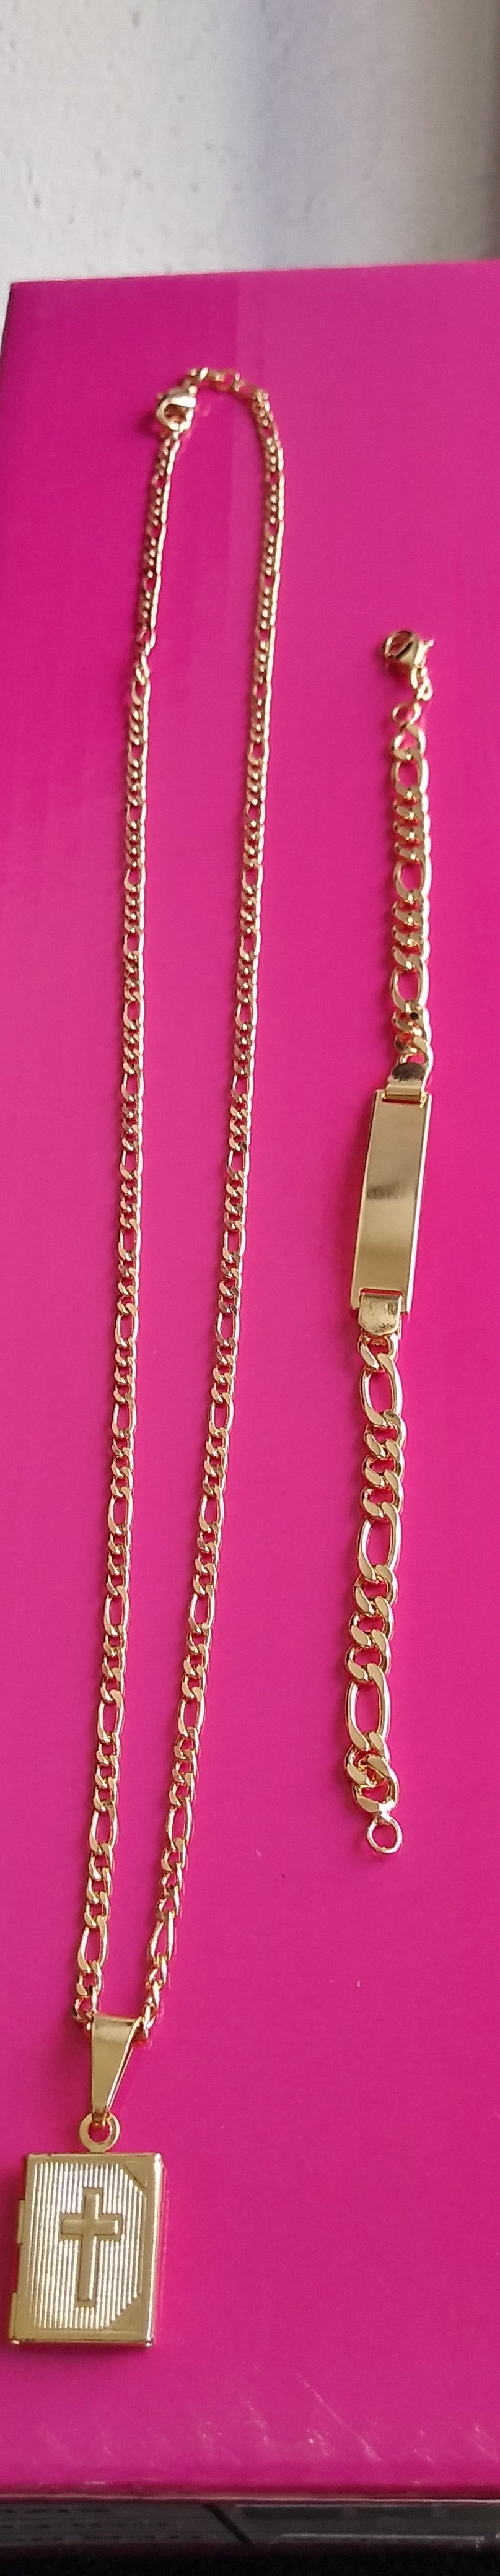 18k Gold Filled Unisex Bible Full Set Chain and Bracelet